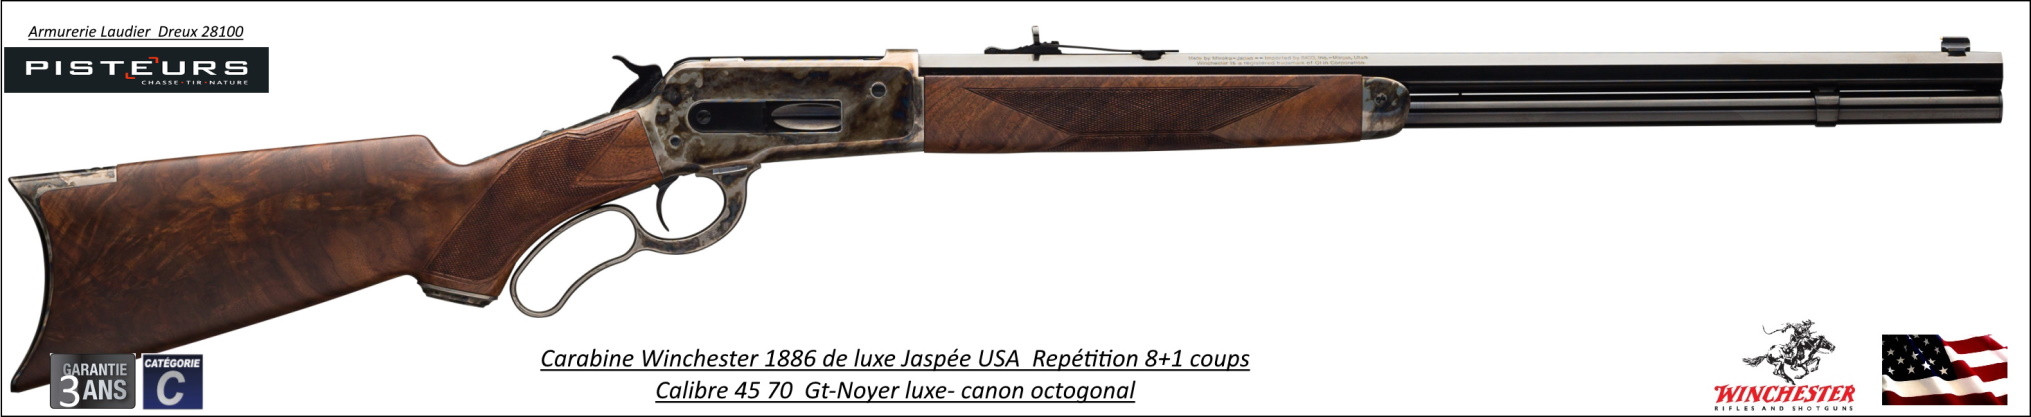 Carabine Winchester 1886 luxe DLX RIF Case Hardener USA Calibre 45 70 GT 8+1 coups-Ref 534227142